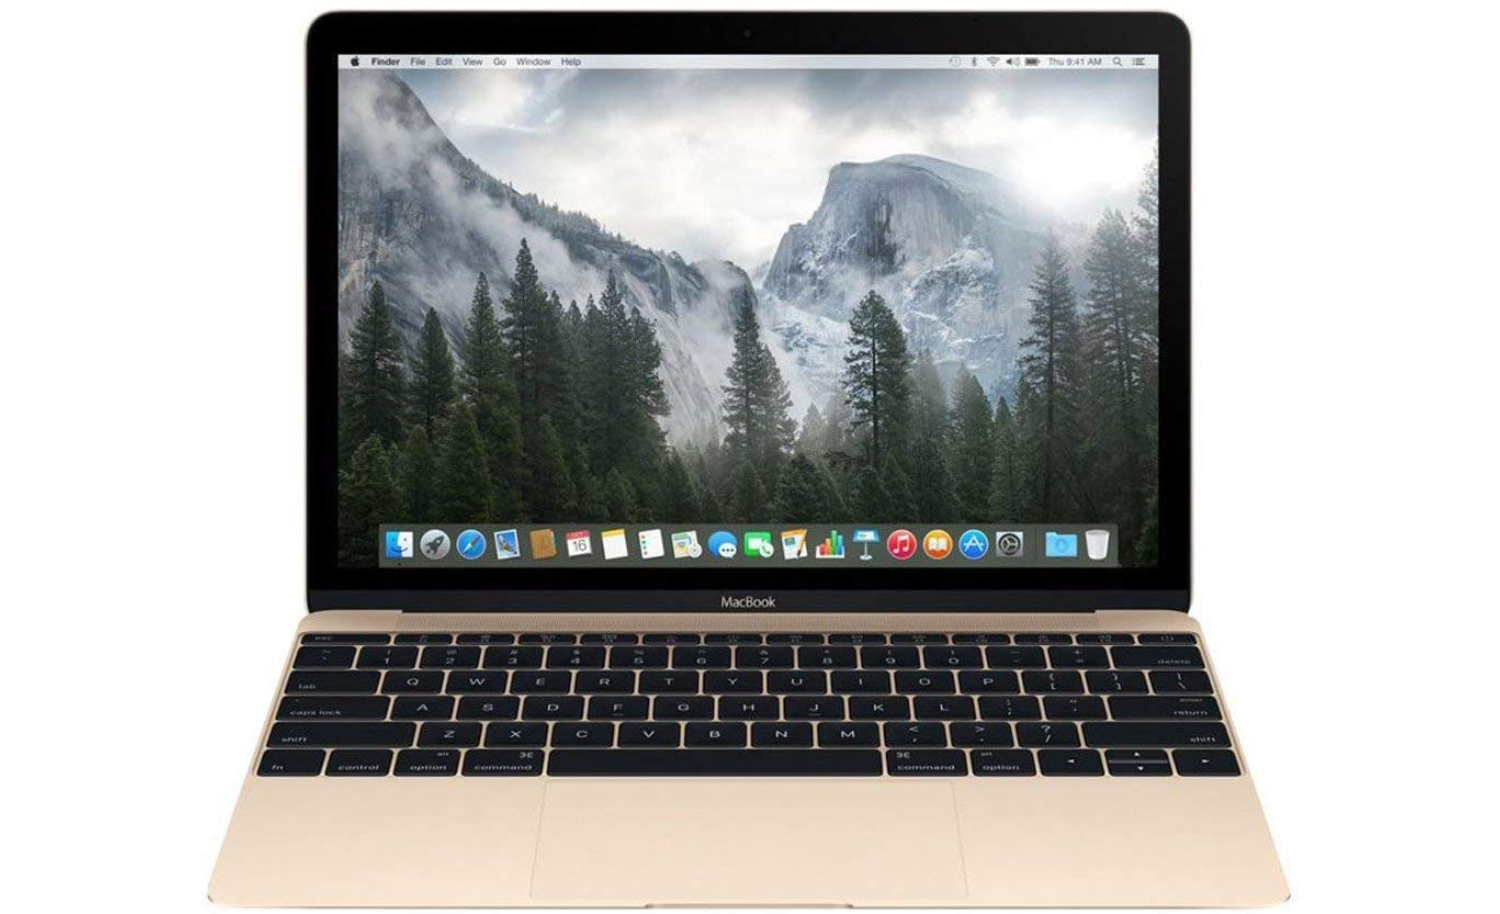 Apple Macbook(2015) Intel Dual Core 8GB RAM 256GB SSD Big Sur 11.6